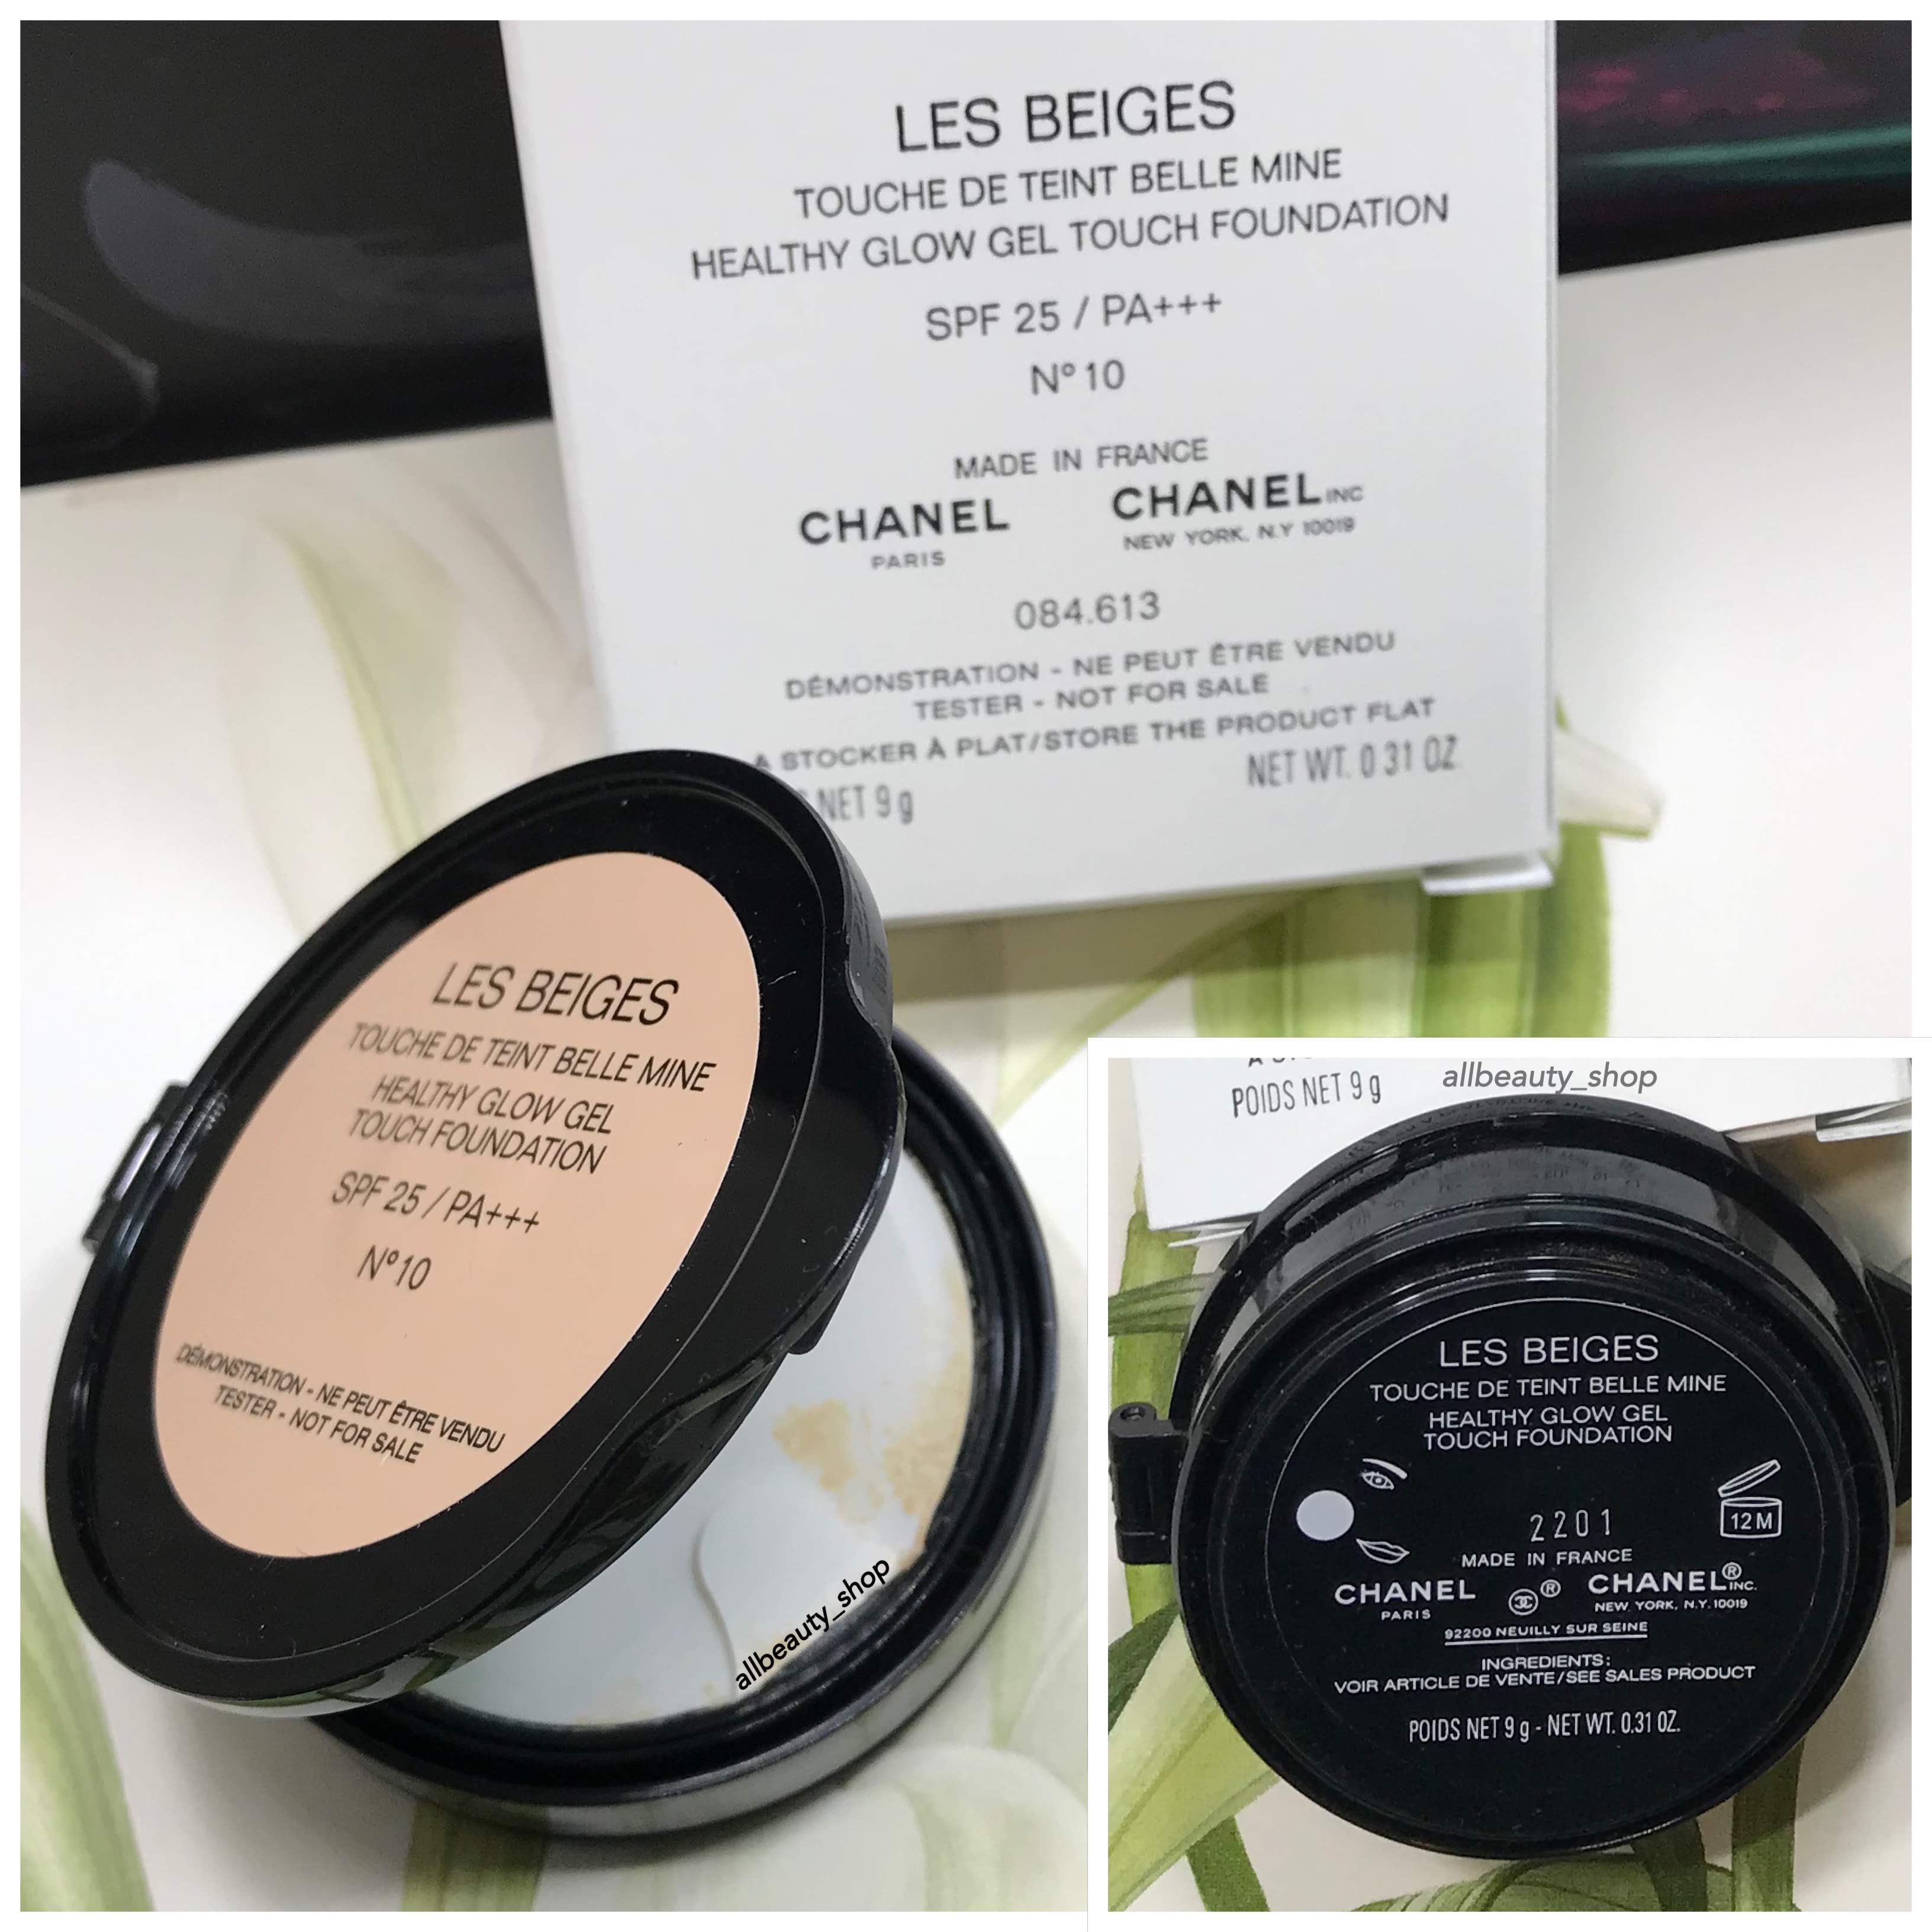 Chanel Refill Les Beiges Healthy Glow Gel Touch Foundation Spf 25 / Pa ++ #10 ขนาด 9g. ( รีฟิวไซส์ปกติ //กล่องเทสเตอร์) รองพื้นเนื้อเจลสำหรับทัชอัพเพิ่มความสดชื่นระหว่างวัน